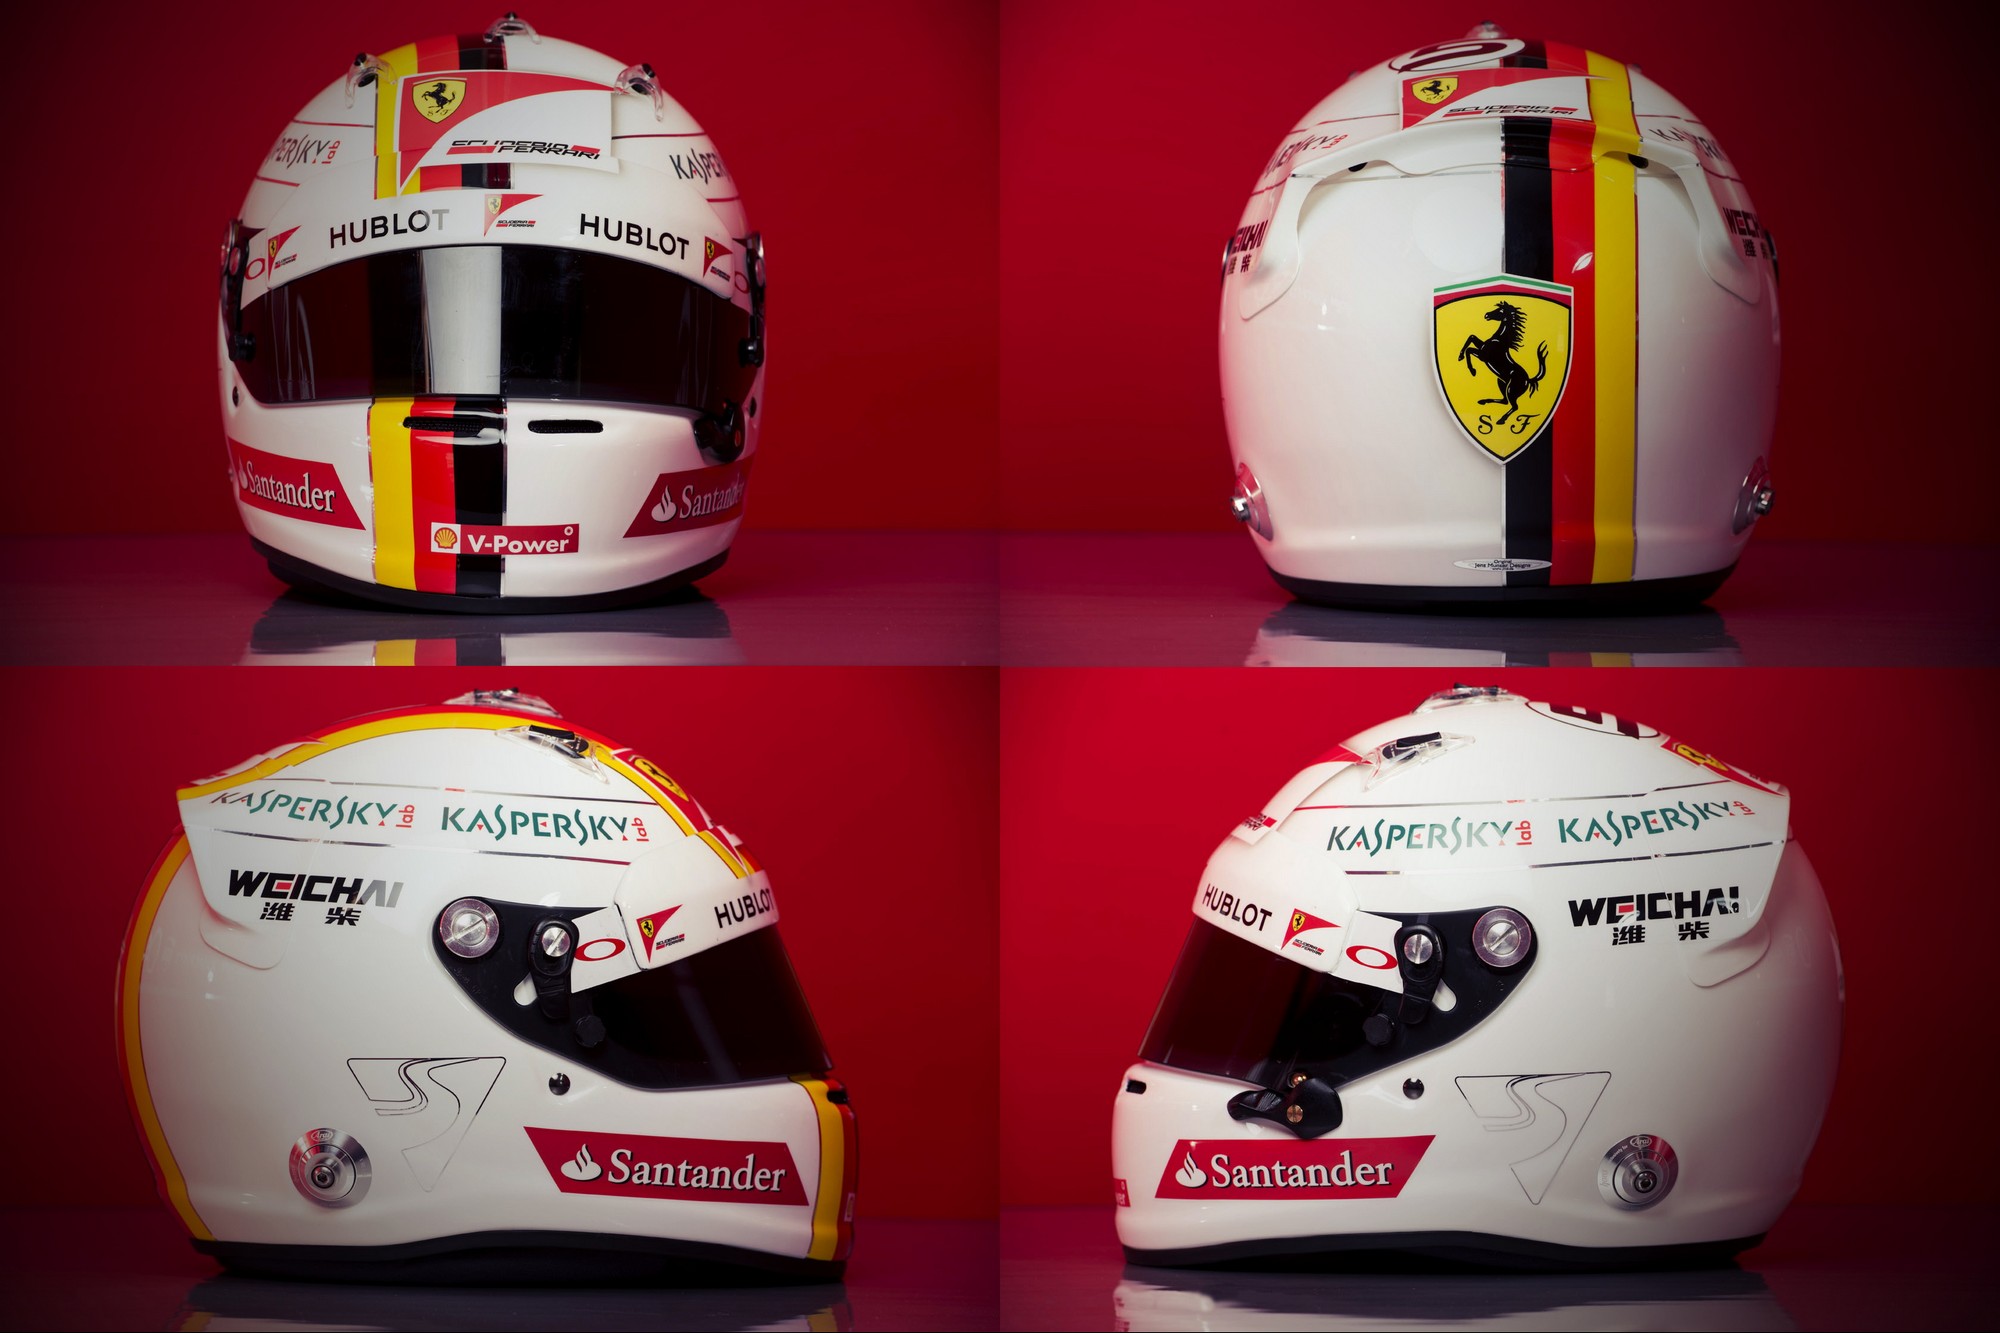 Шлем Себастьяна Феттеля на сезон 2015 года | 2015 helmet of Sebastian Vettel